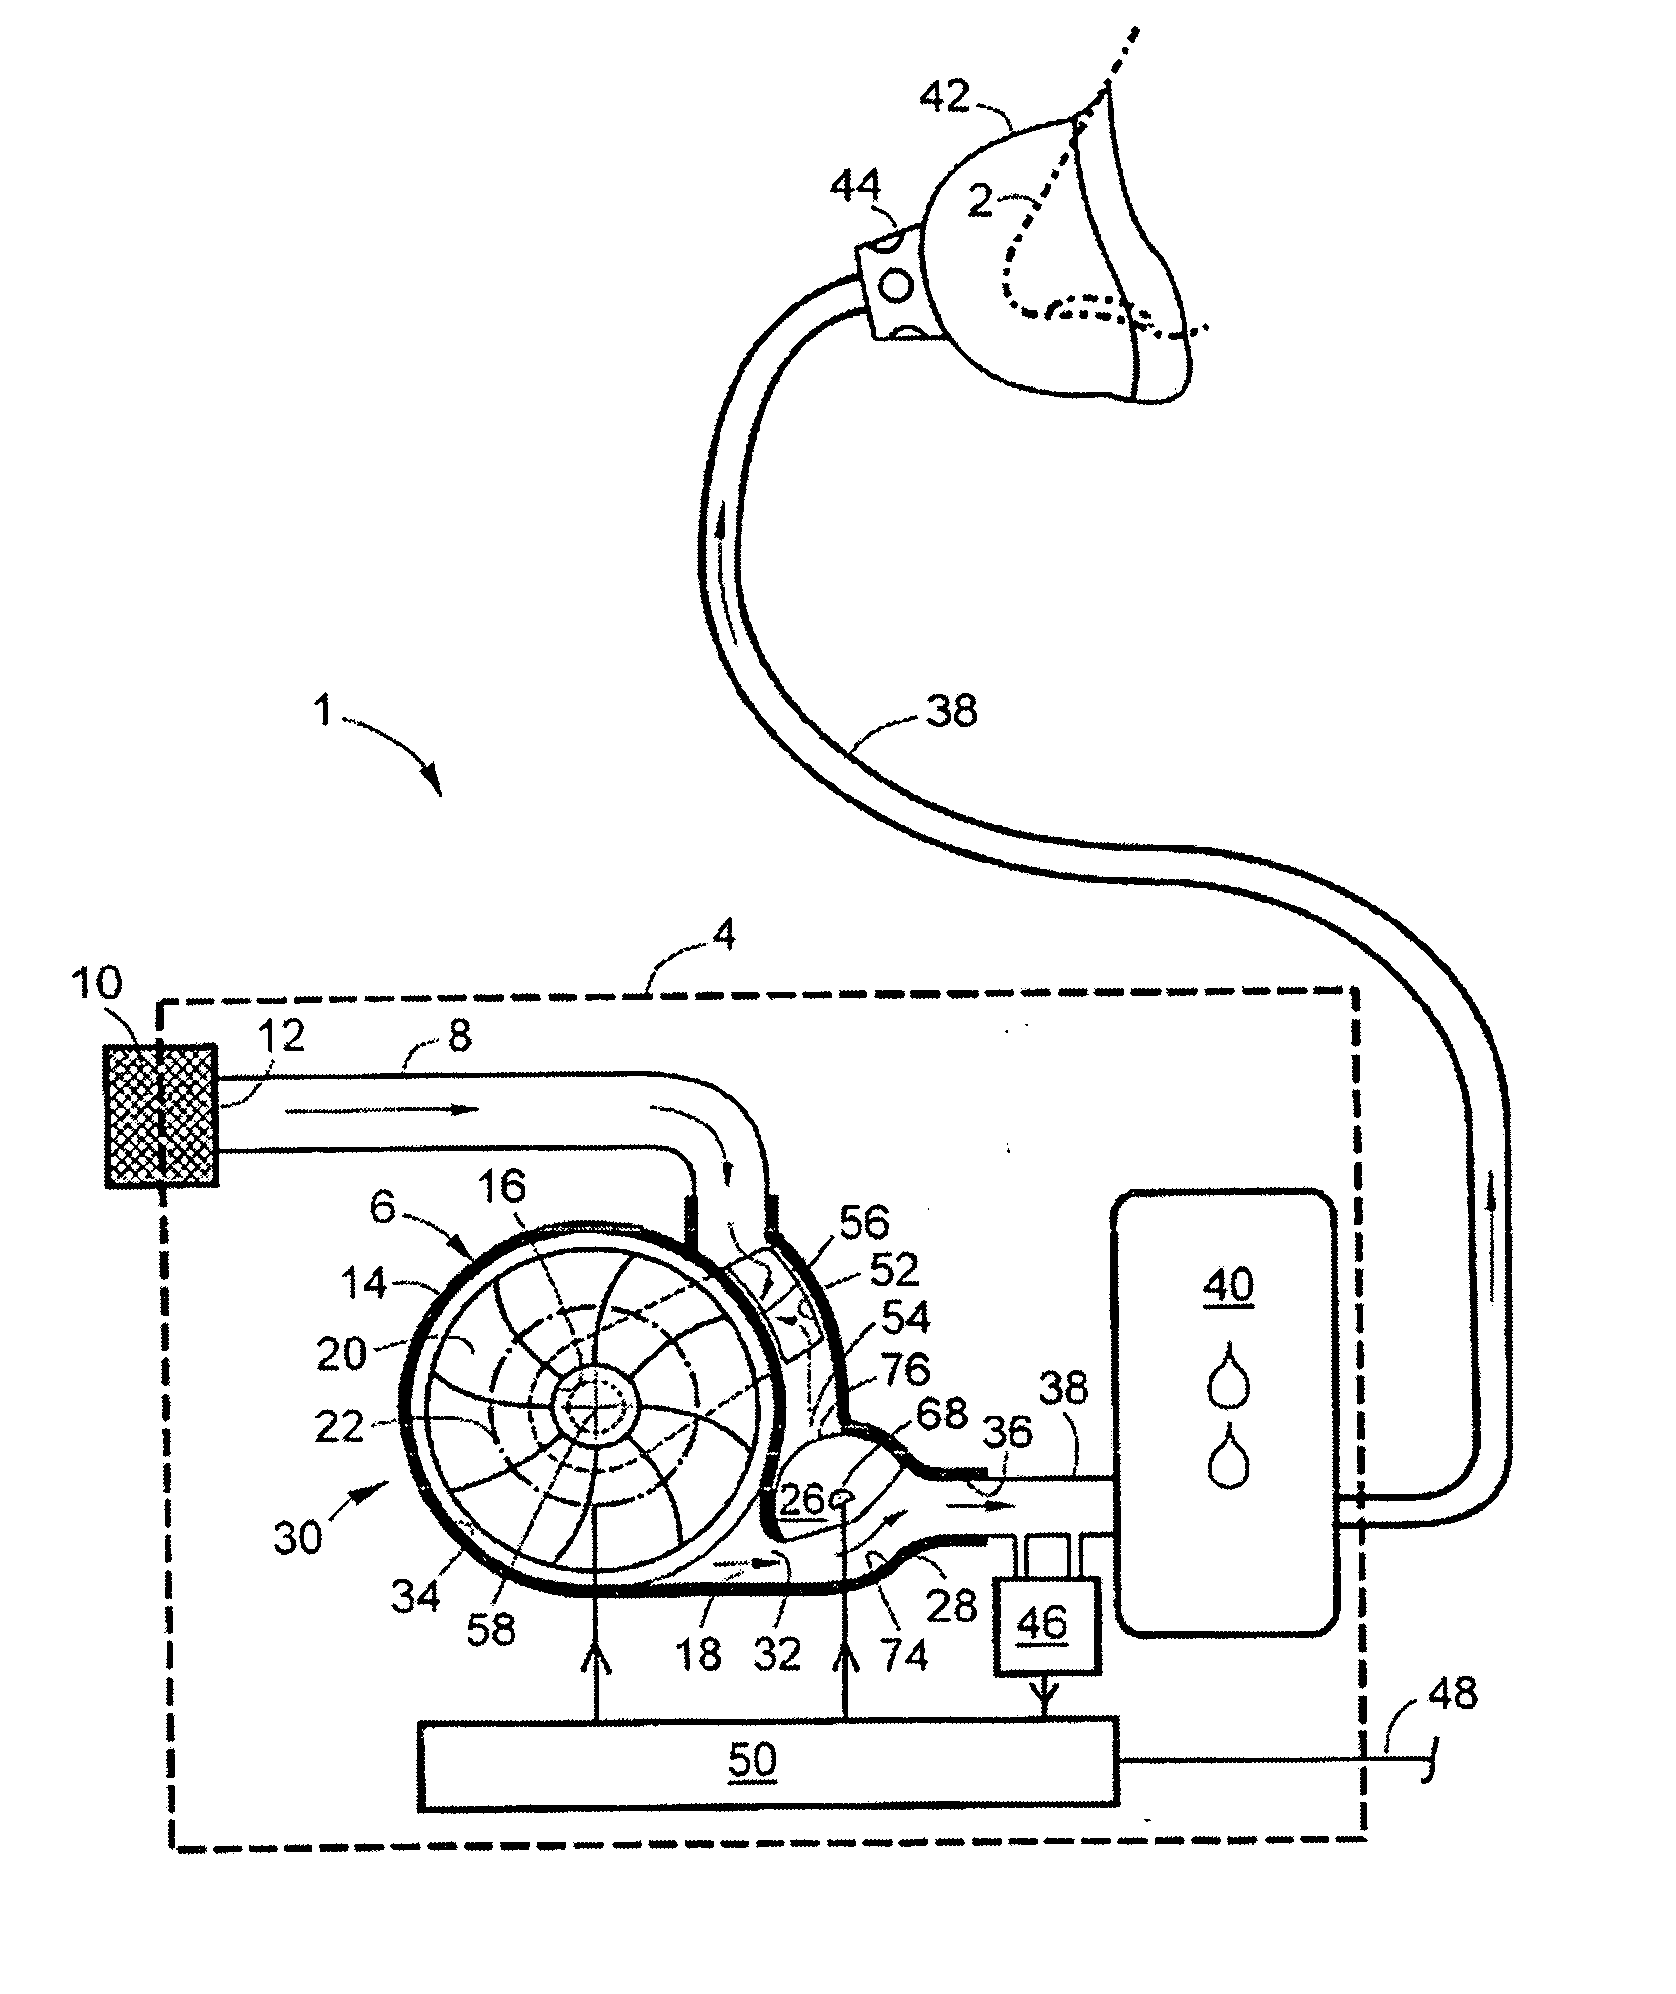 Combined gas flow generator & control valve housing in a ventilator